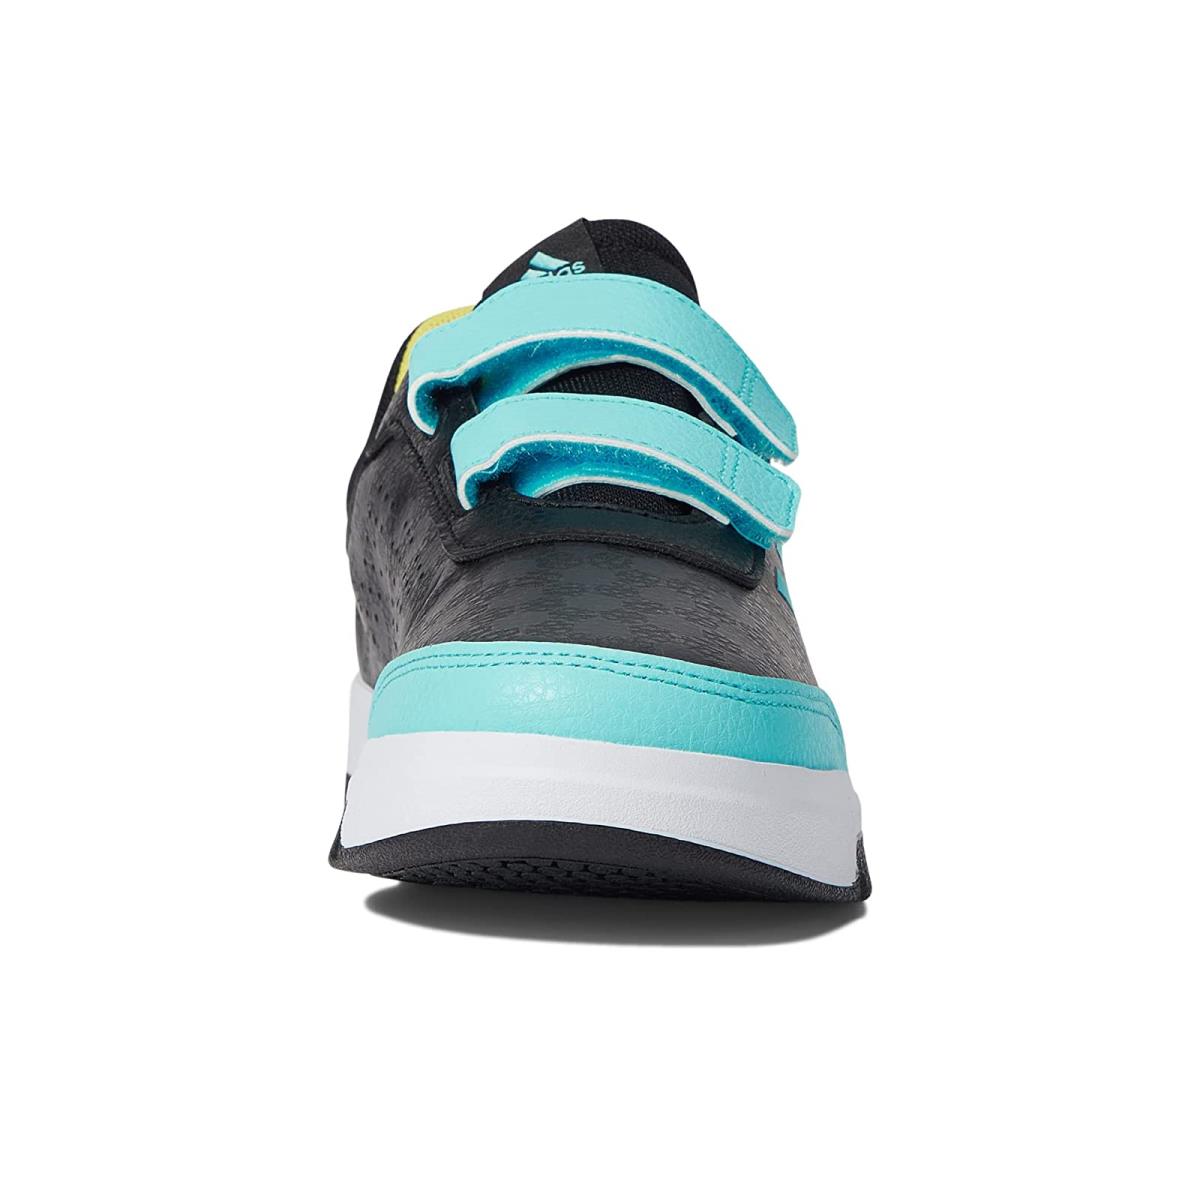 Adidas shoes  2